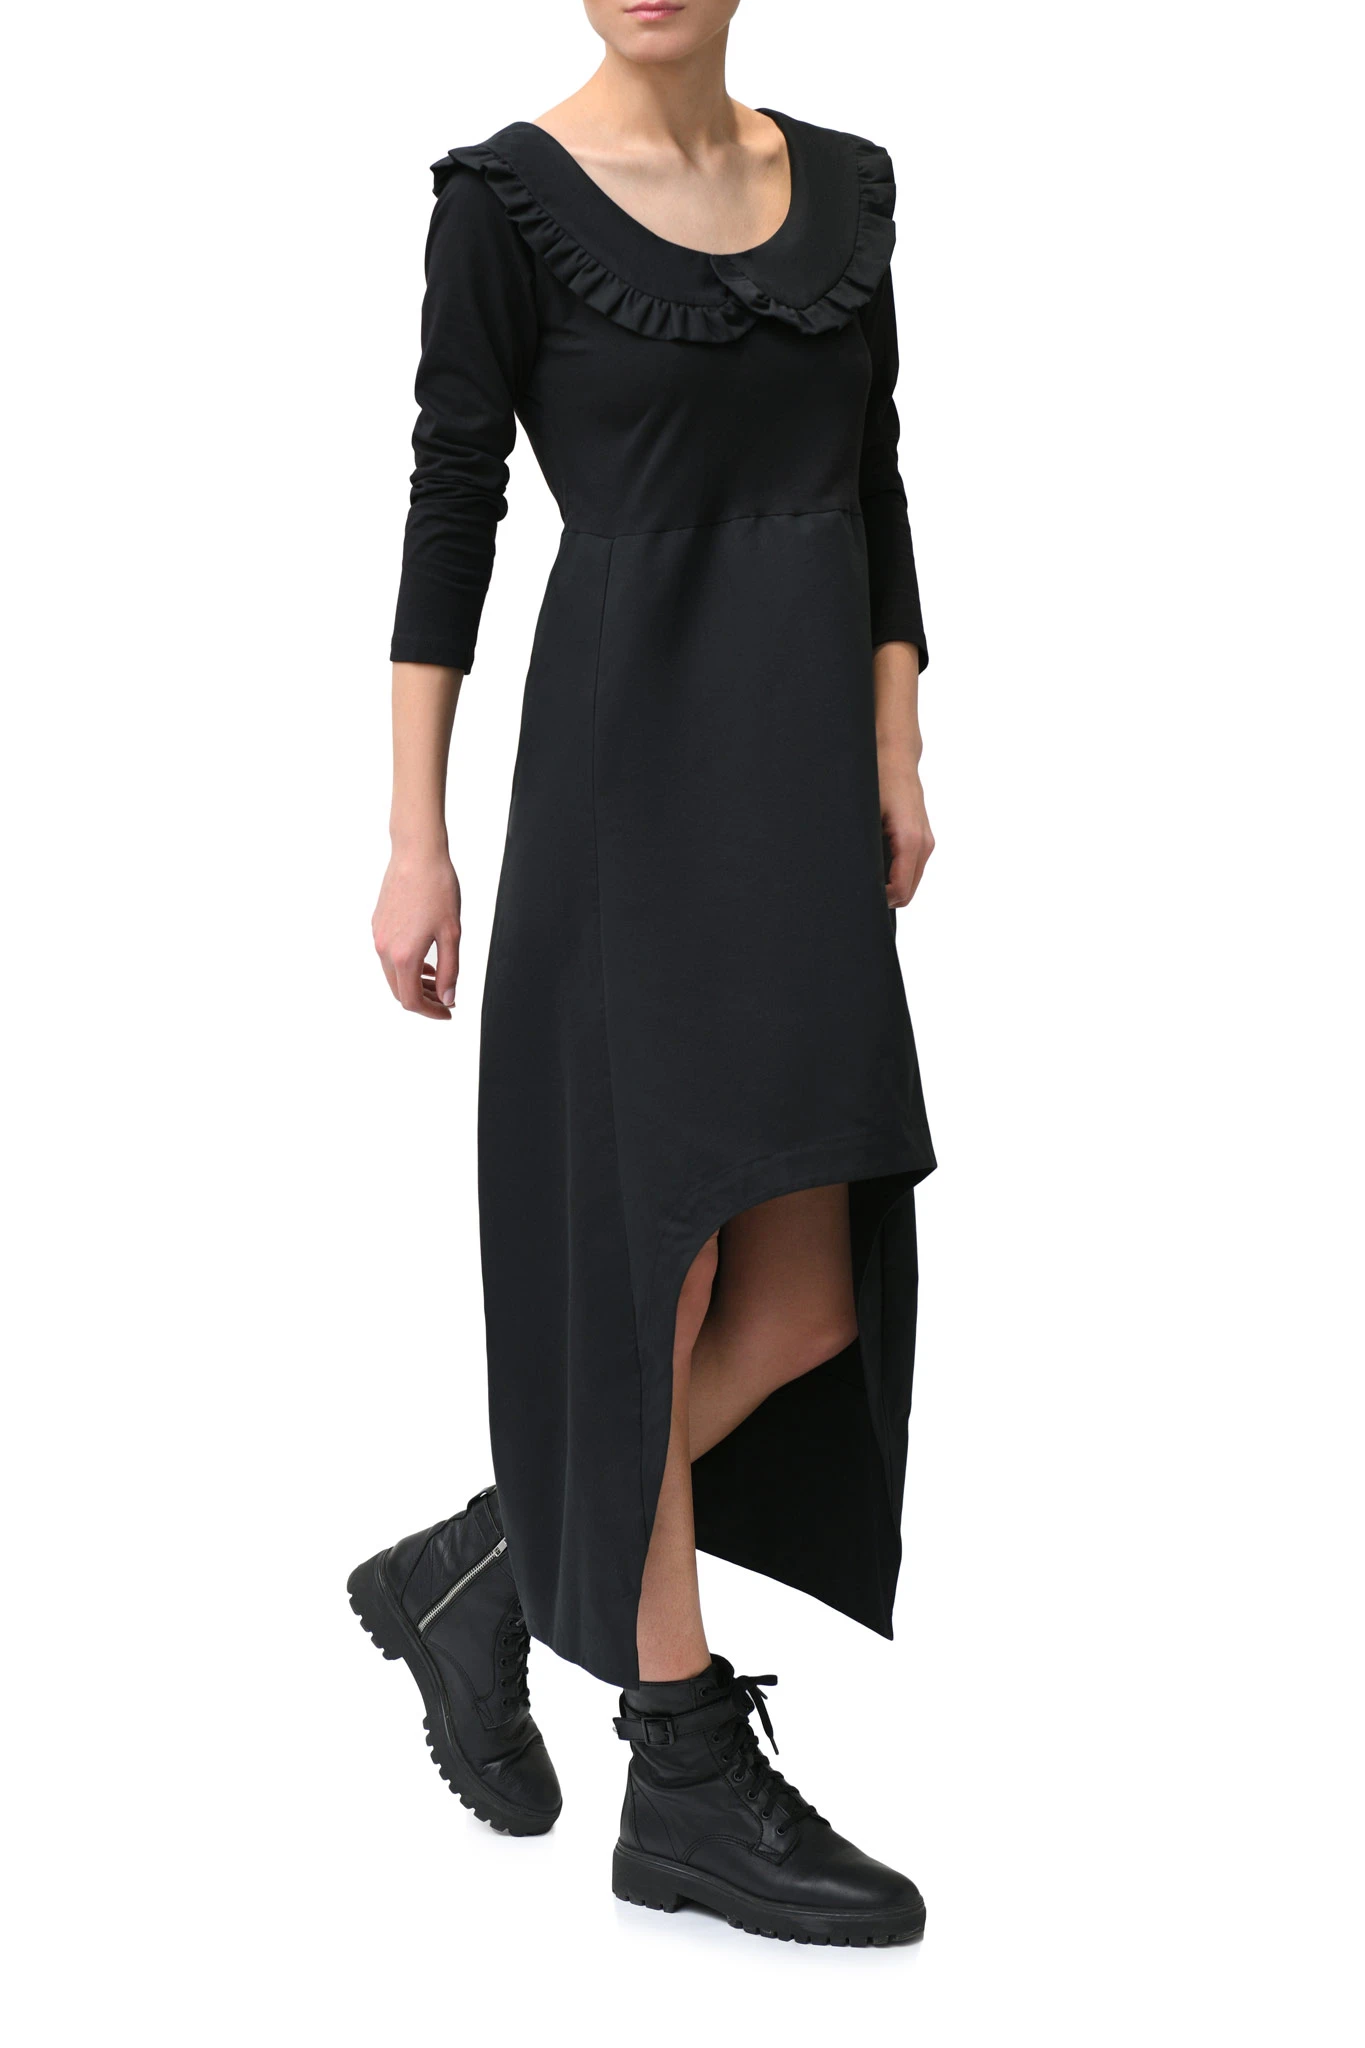 Dress Teresa - buy clothes online of emerging designers